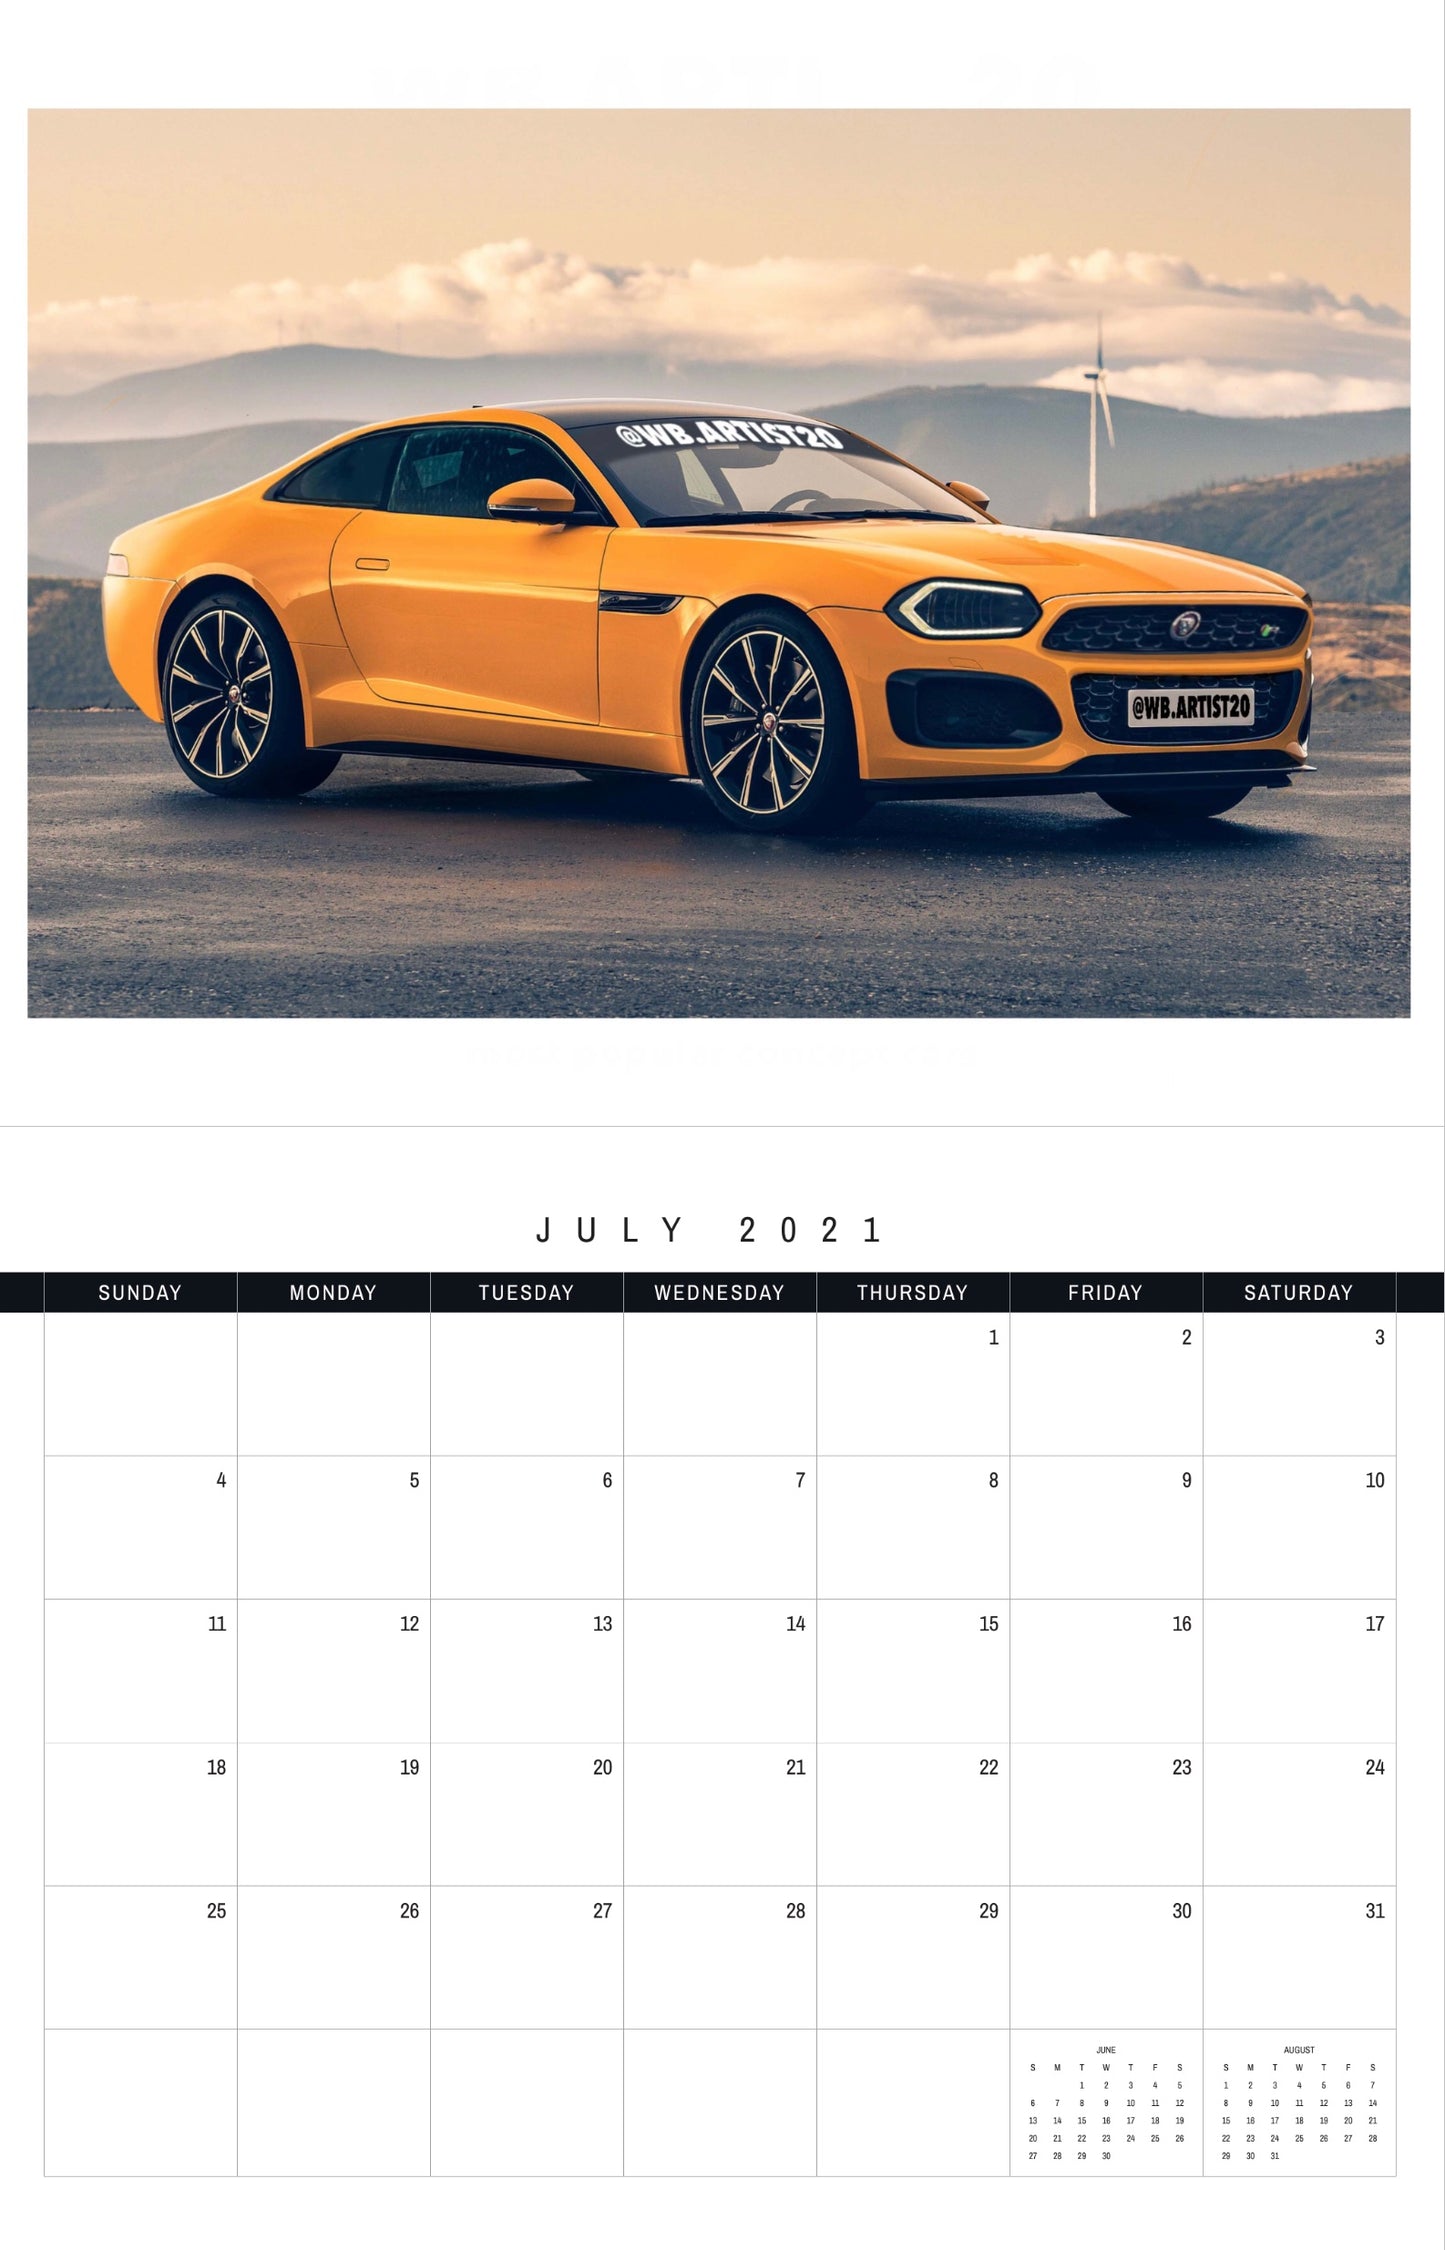 Import 2021 Calendar by WB.Artist20